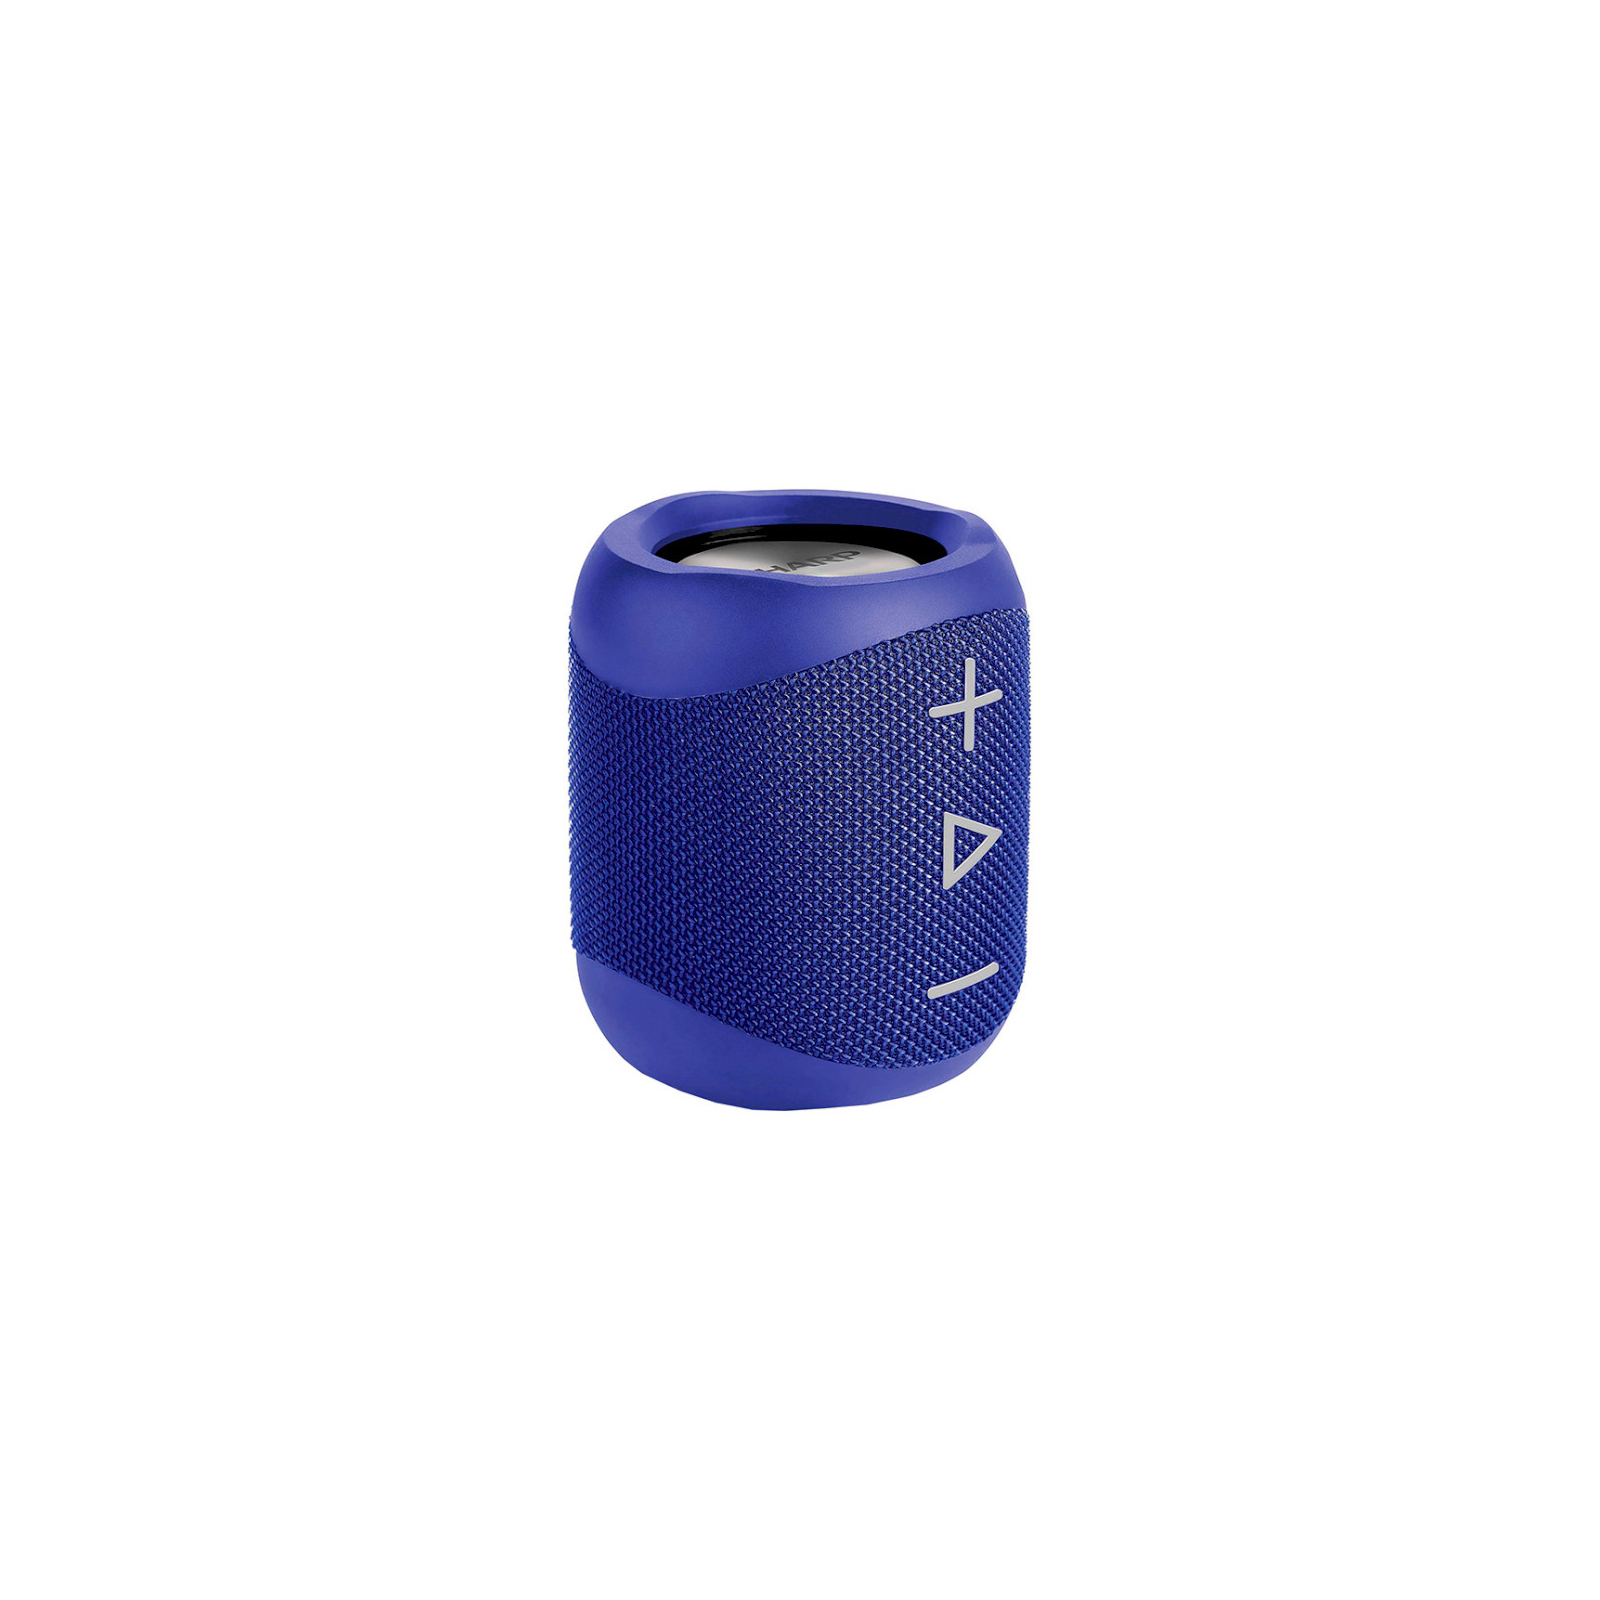 Акустическая система Sharp Compact Wireless Speaker Blue (GX-BT180BL)